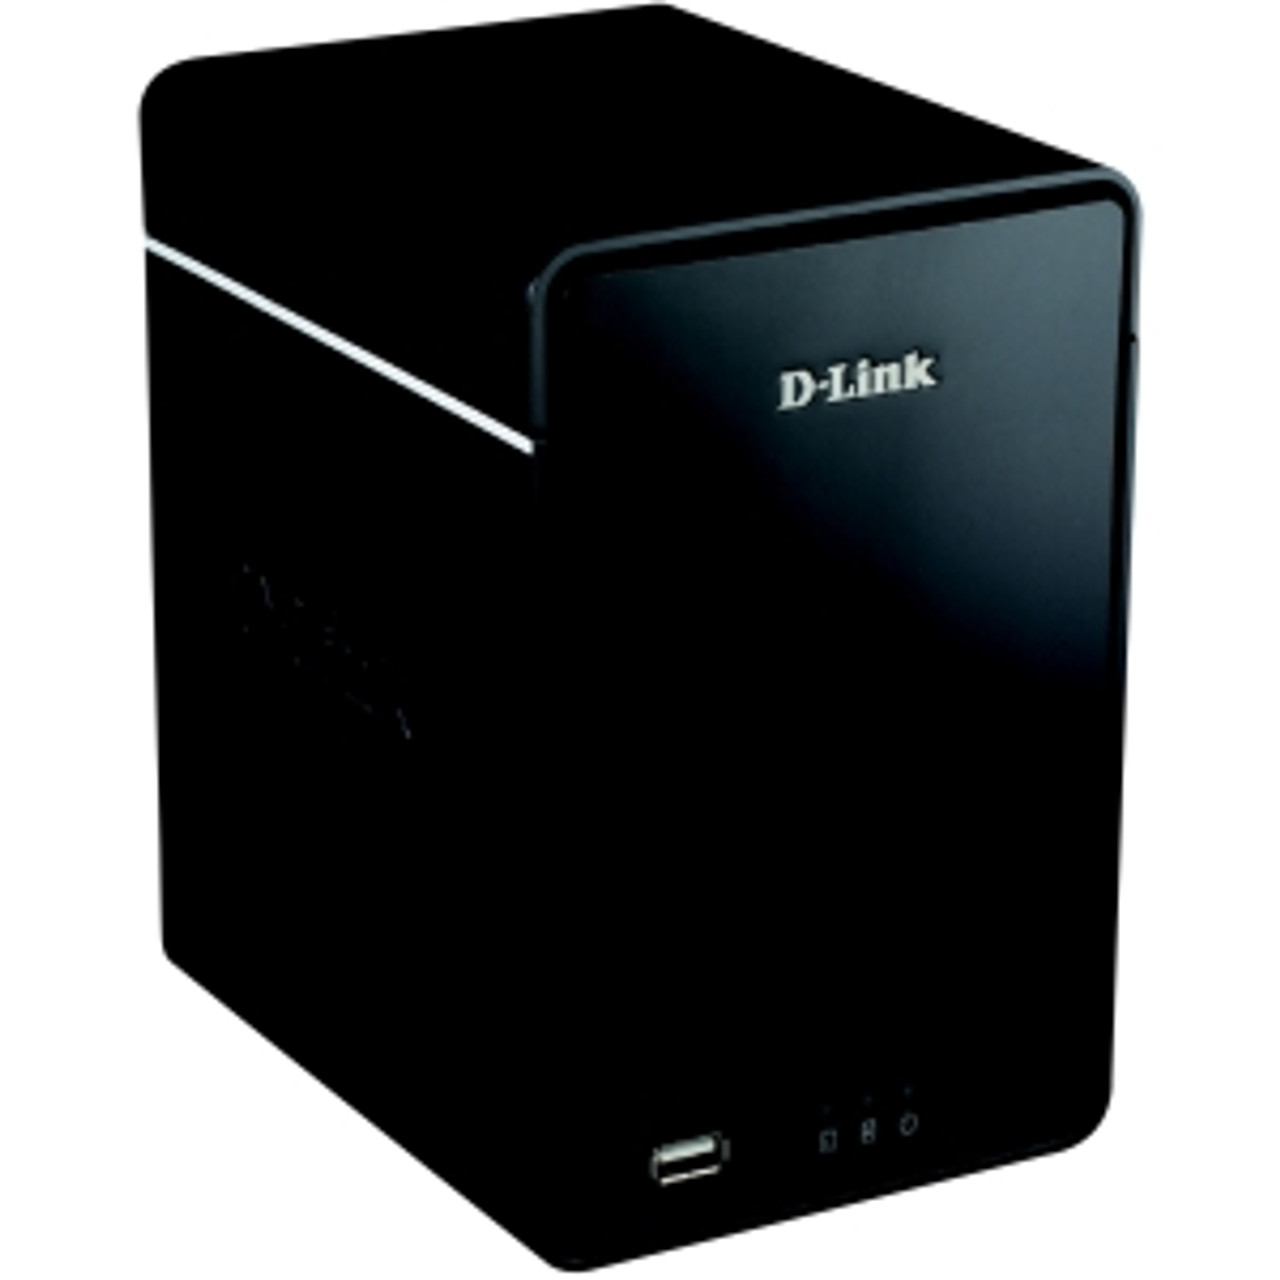 DNR-326 D-Link DNR-326 Video Surveillance Station Network Video Recorder Motion JPEG, MPEG-4, H.264 Formats (Refurbished)